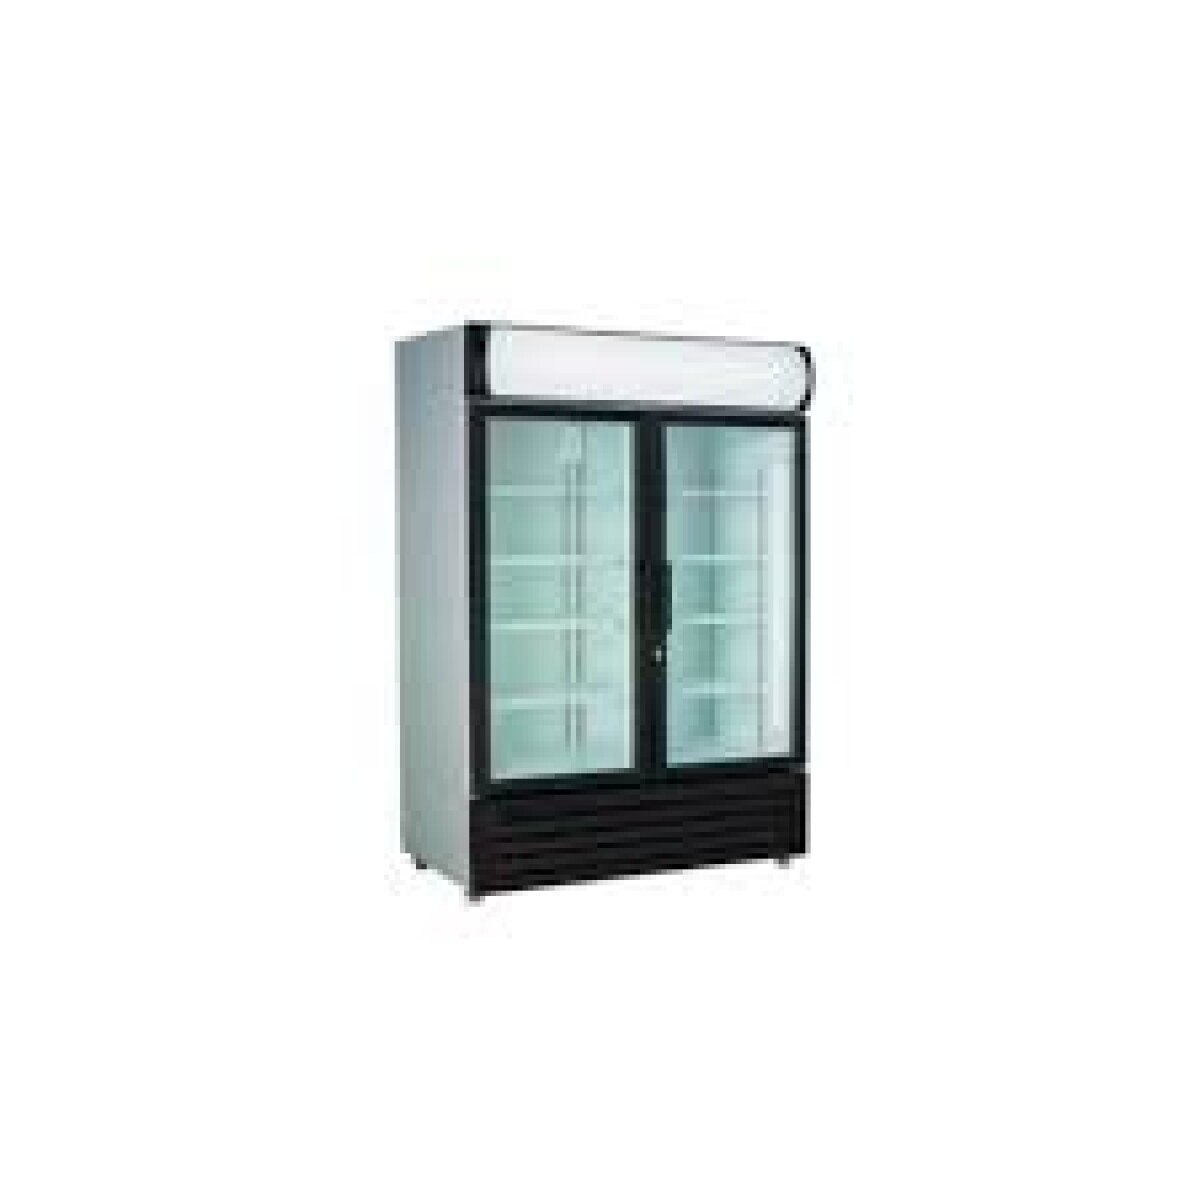 Expositor vertical refrigerado 2 puerta 1000 lts Iccold 